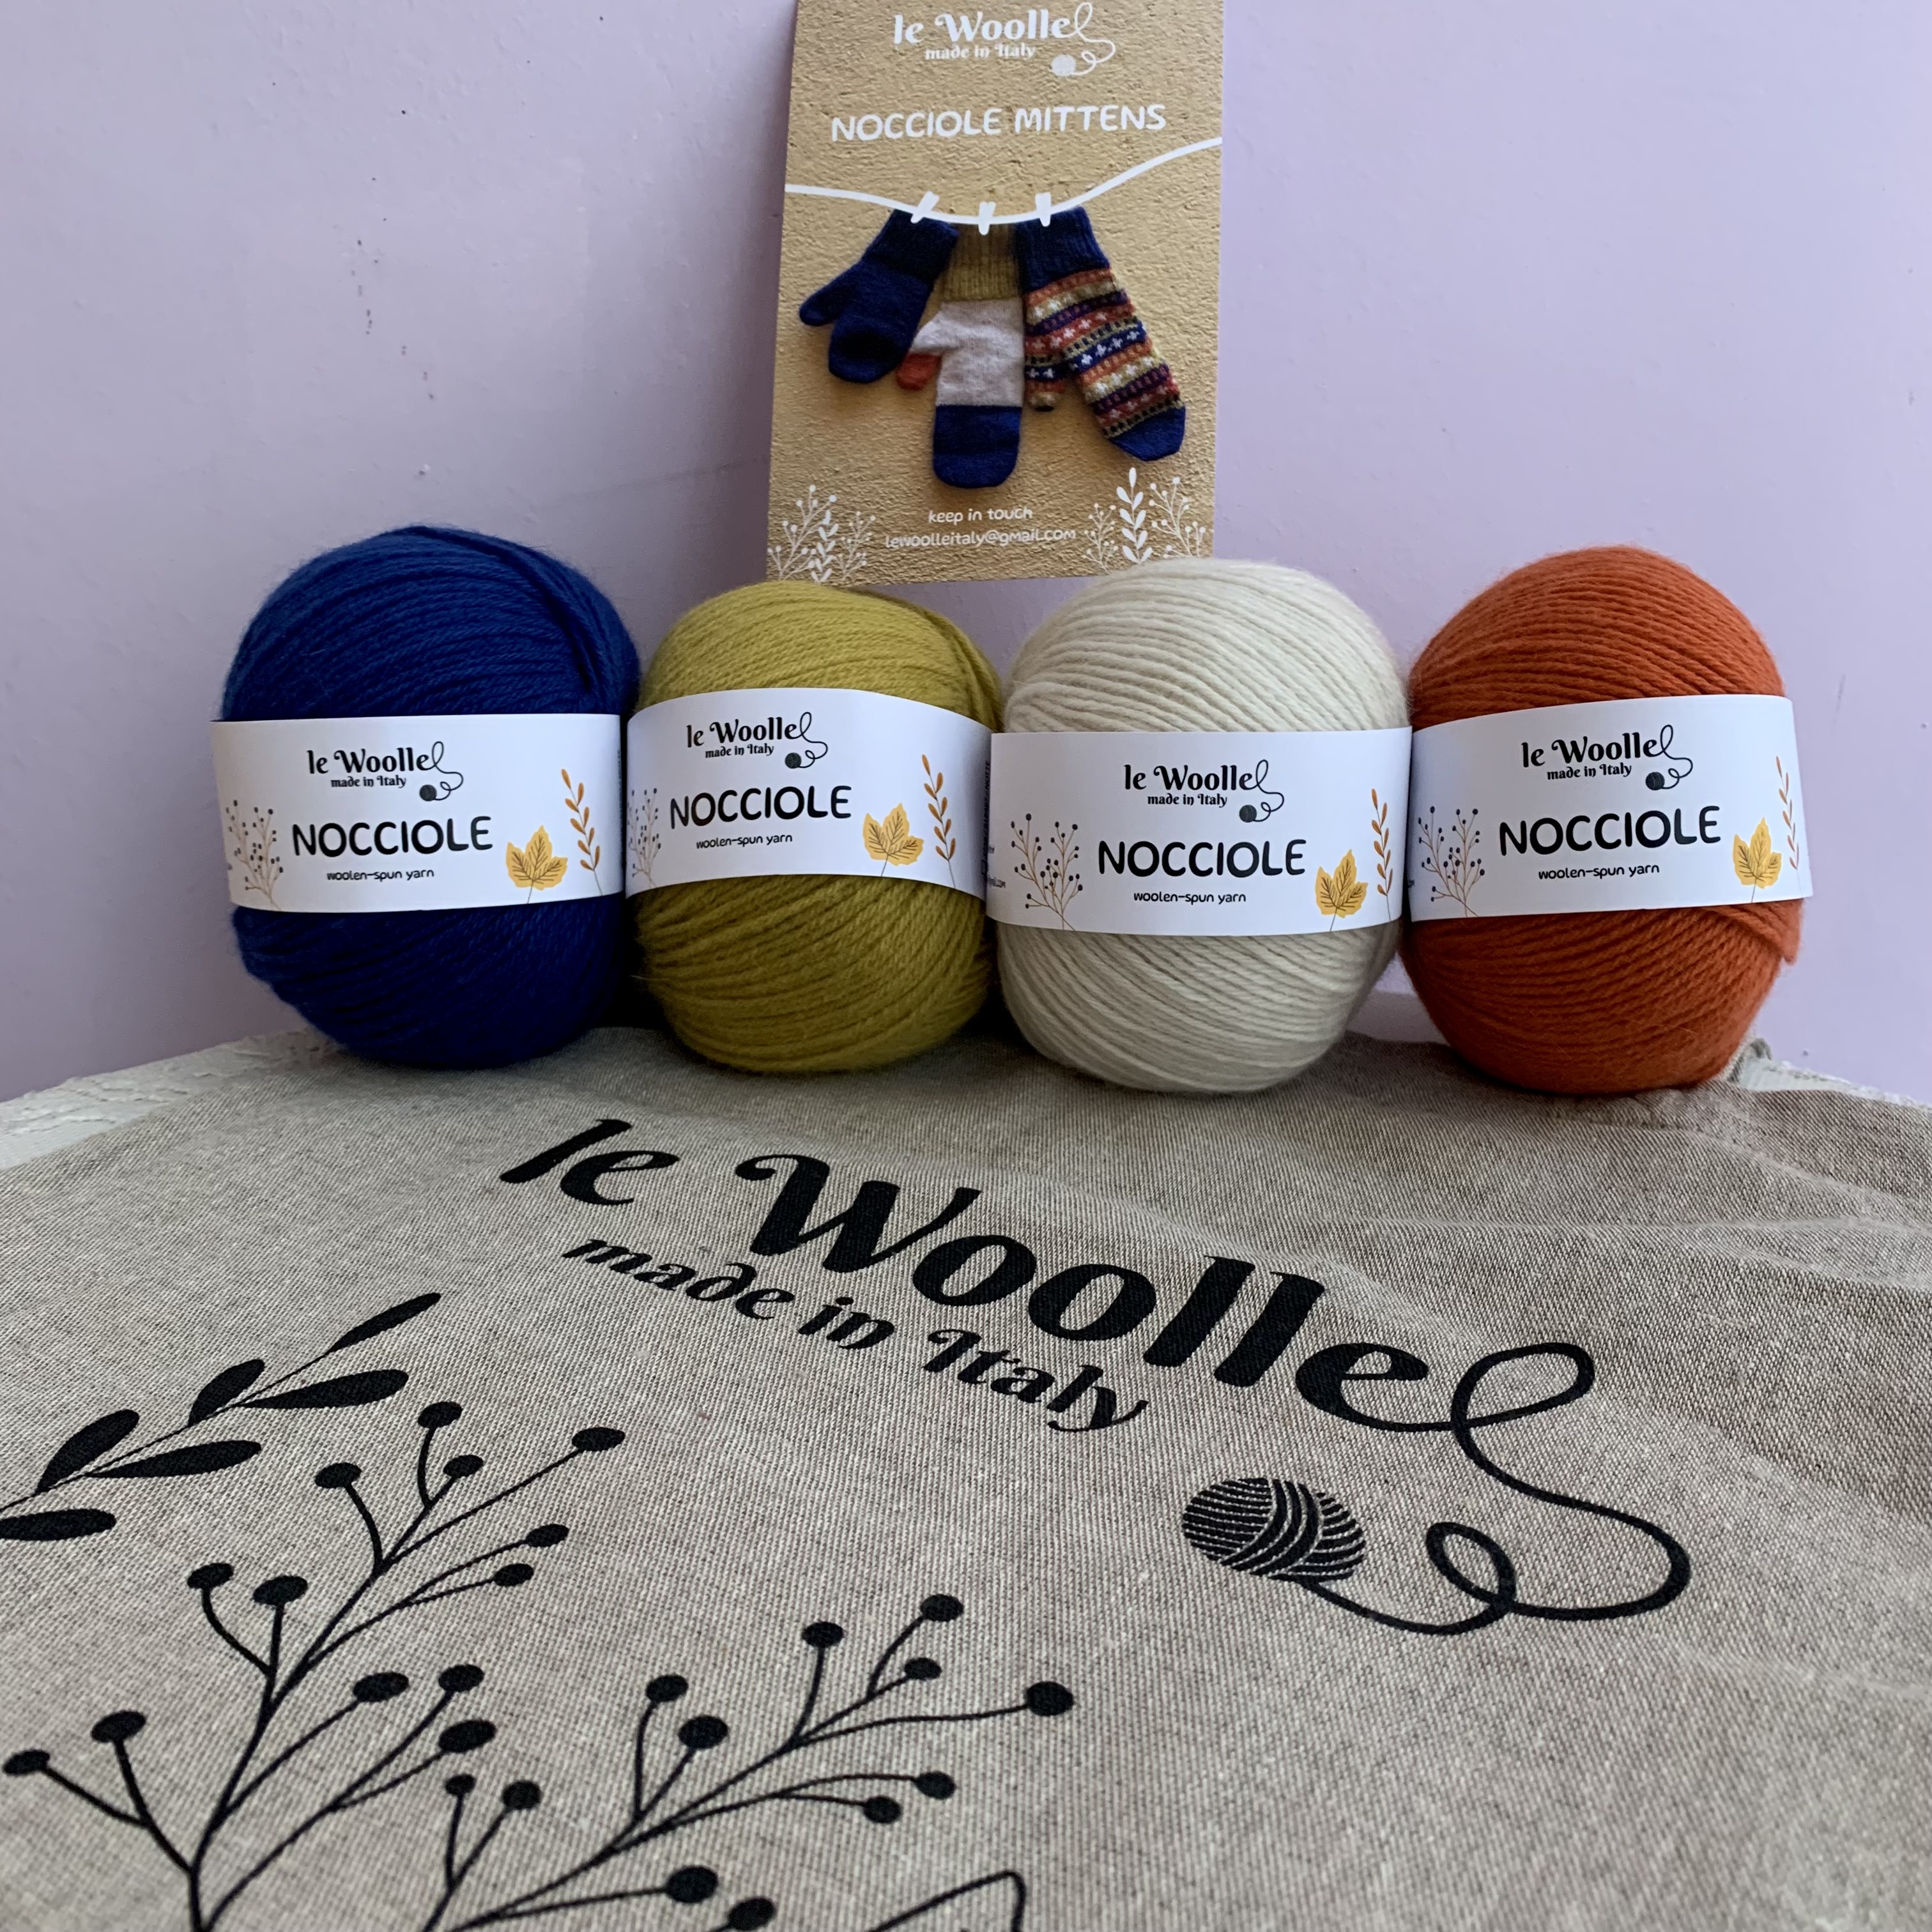 Le Woolle “Nocciole”